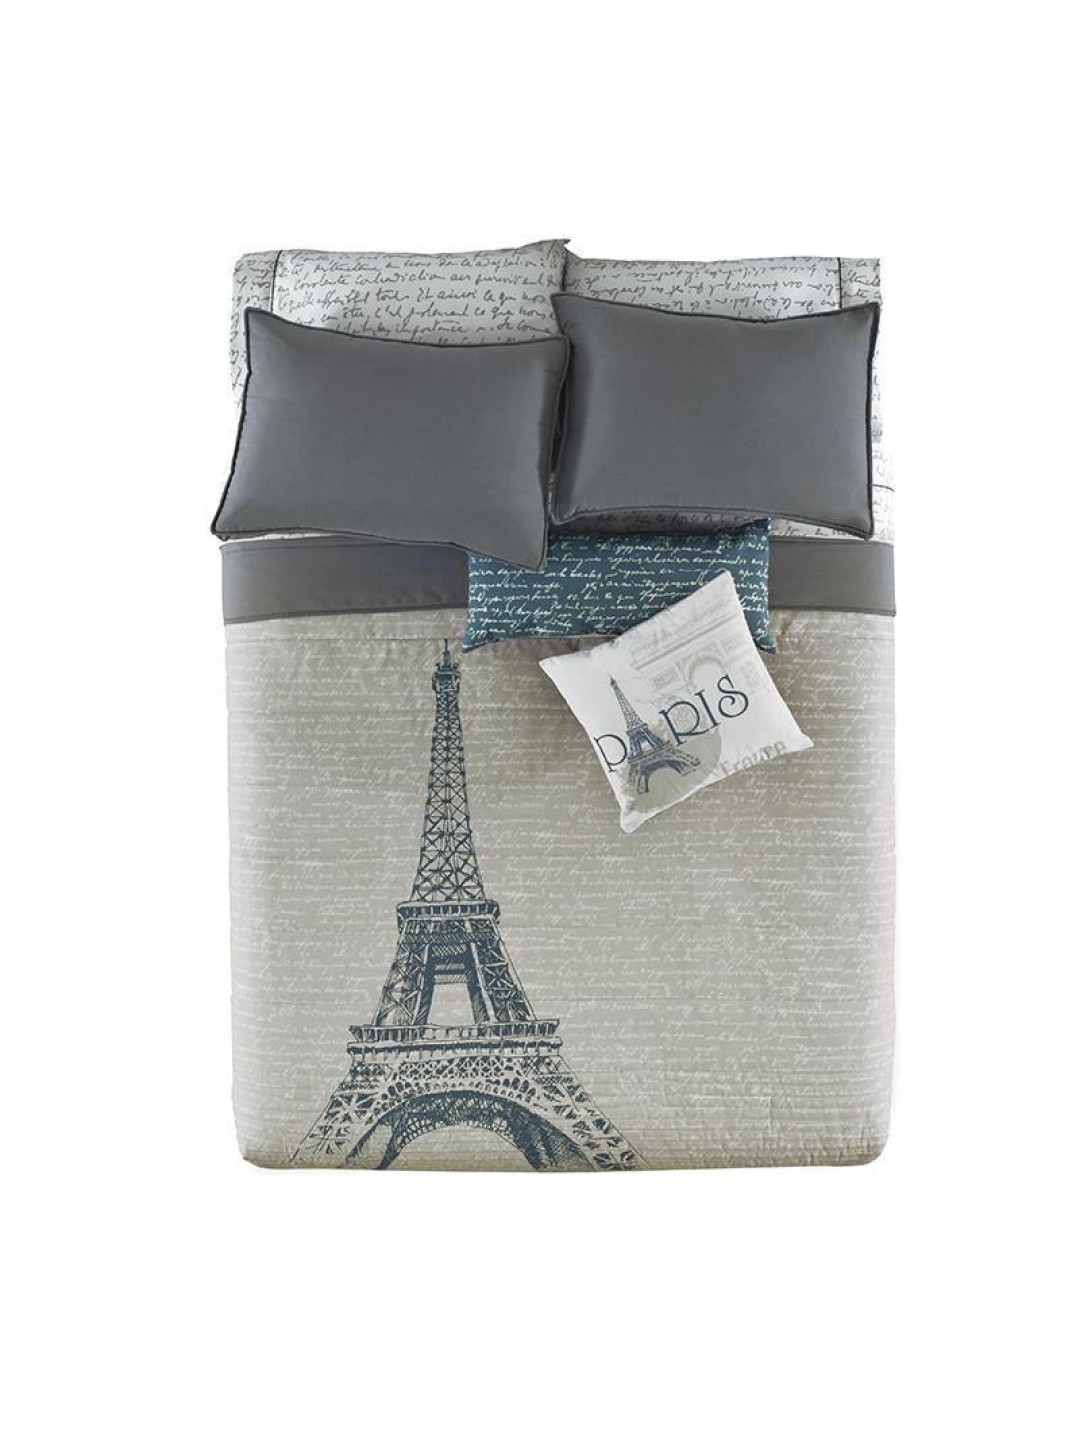 Paris Quilt Set, Reversible to grey